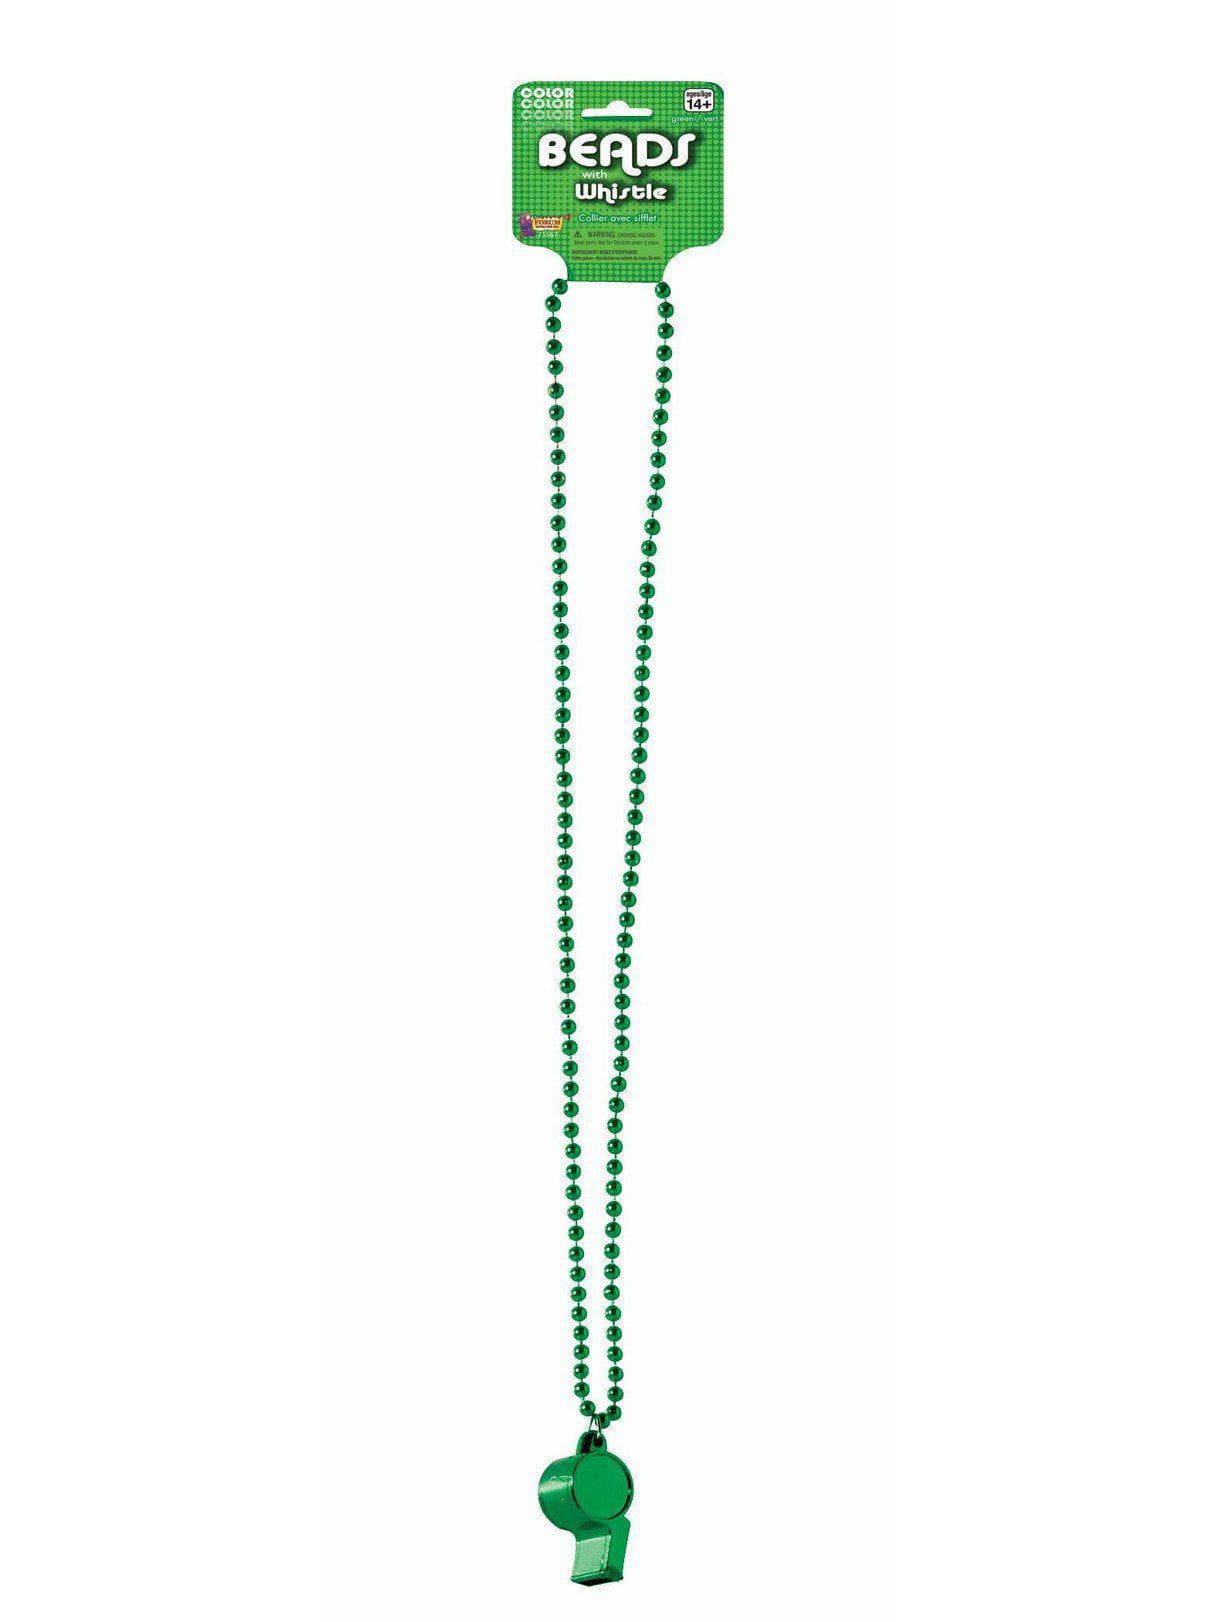 Green Whistle Accessory - costumes.com